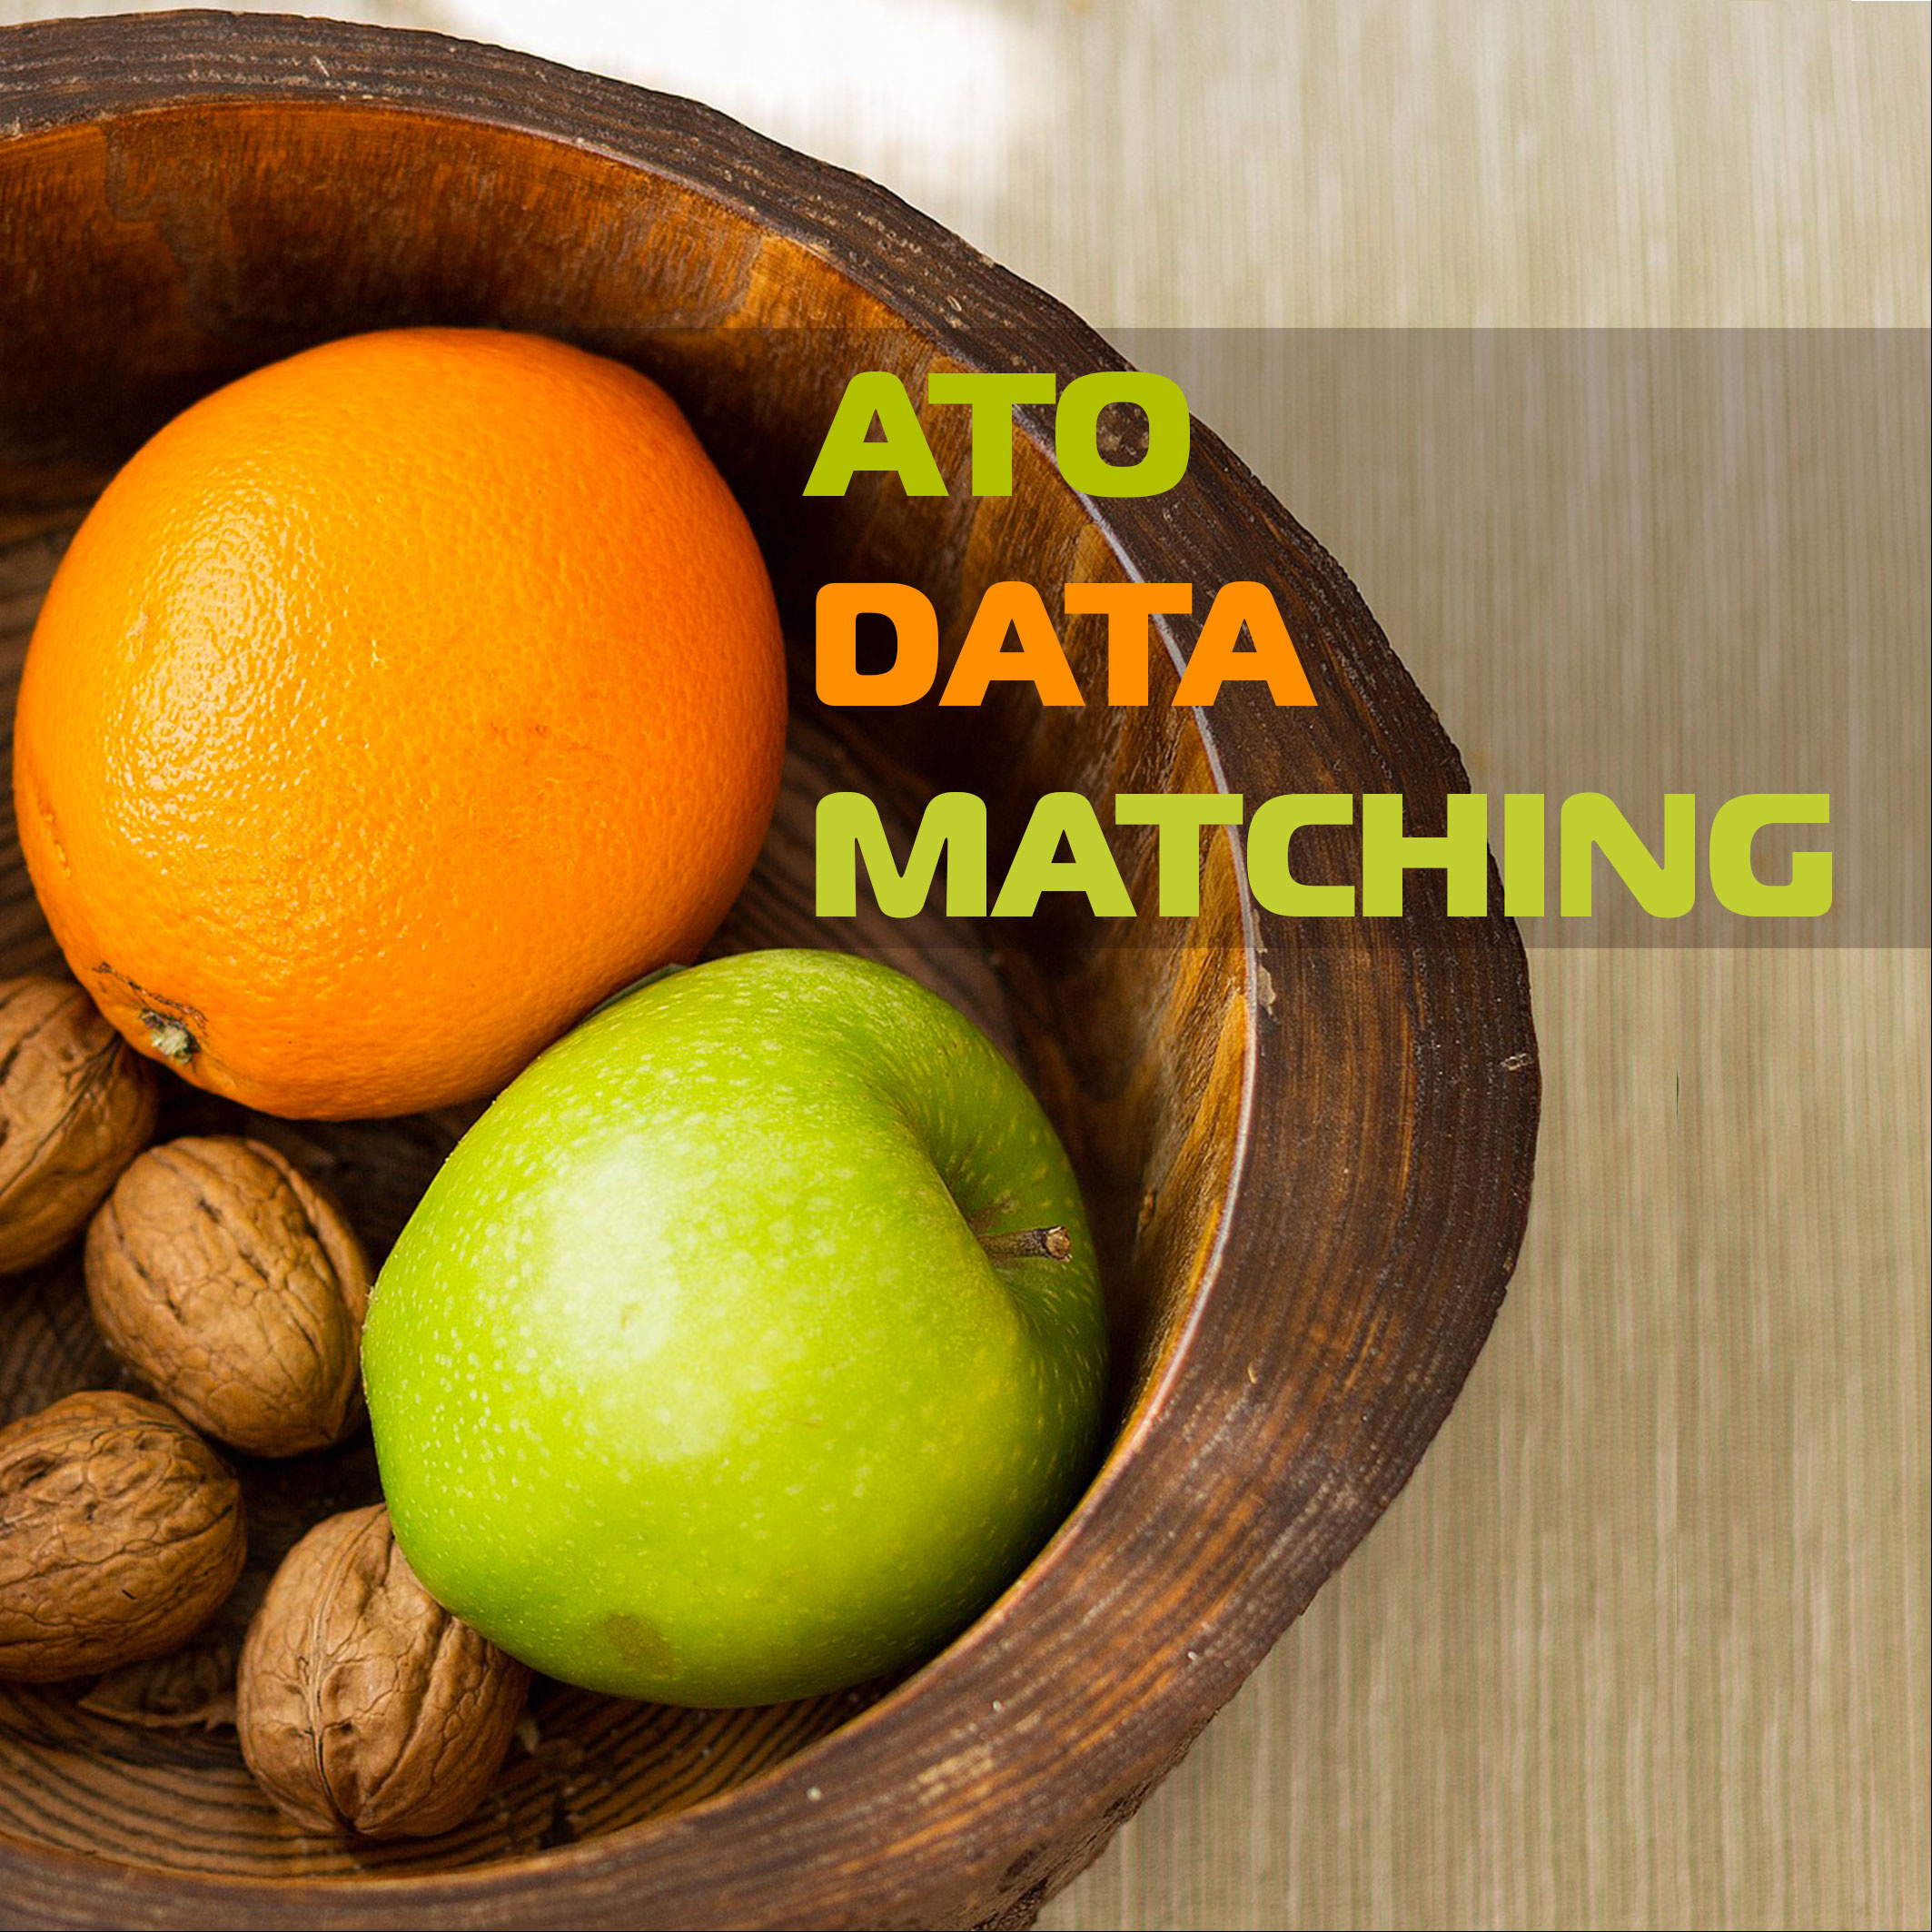 ATO Data Matching